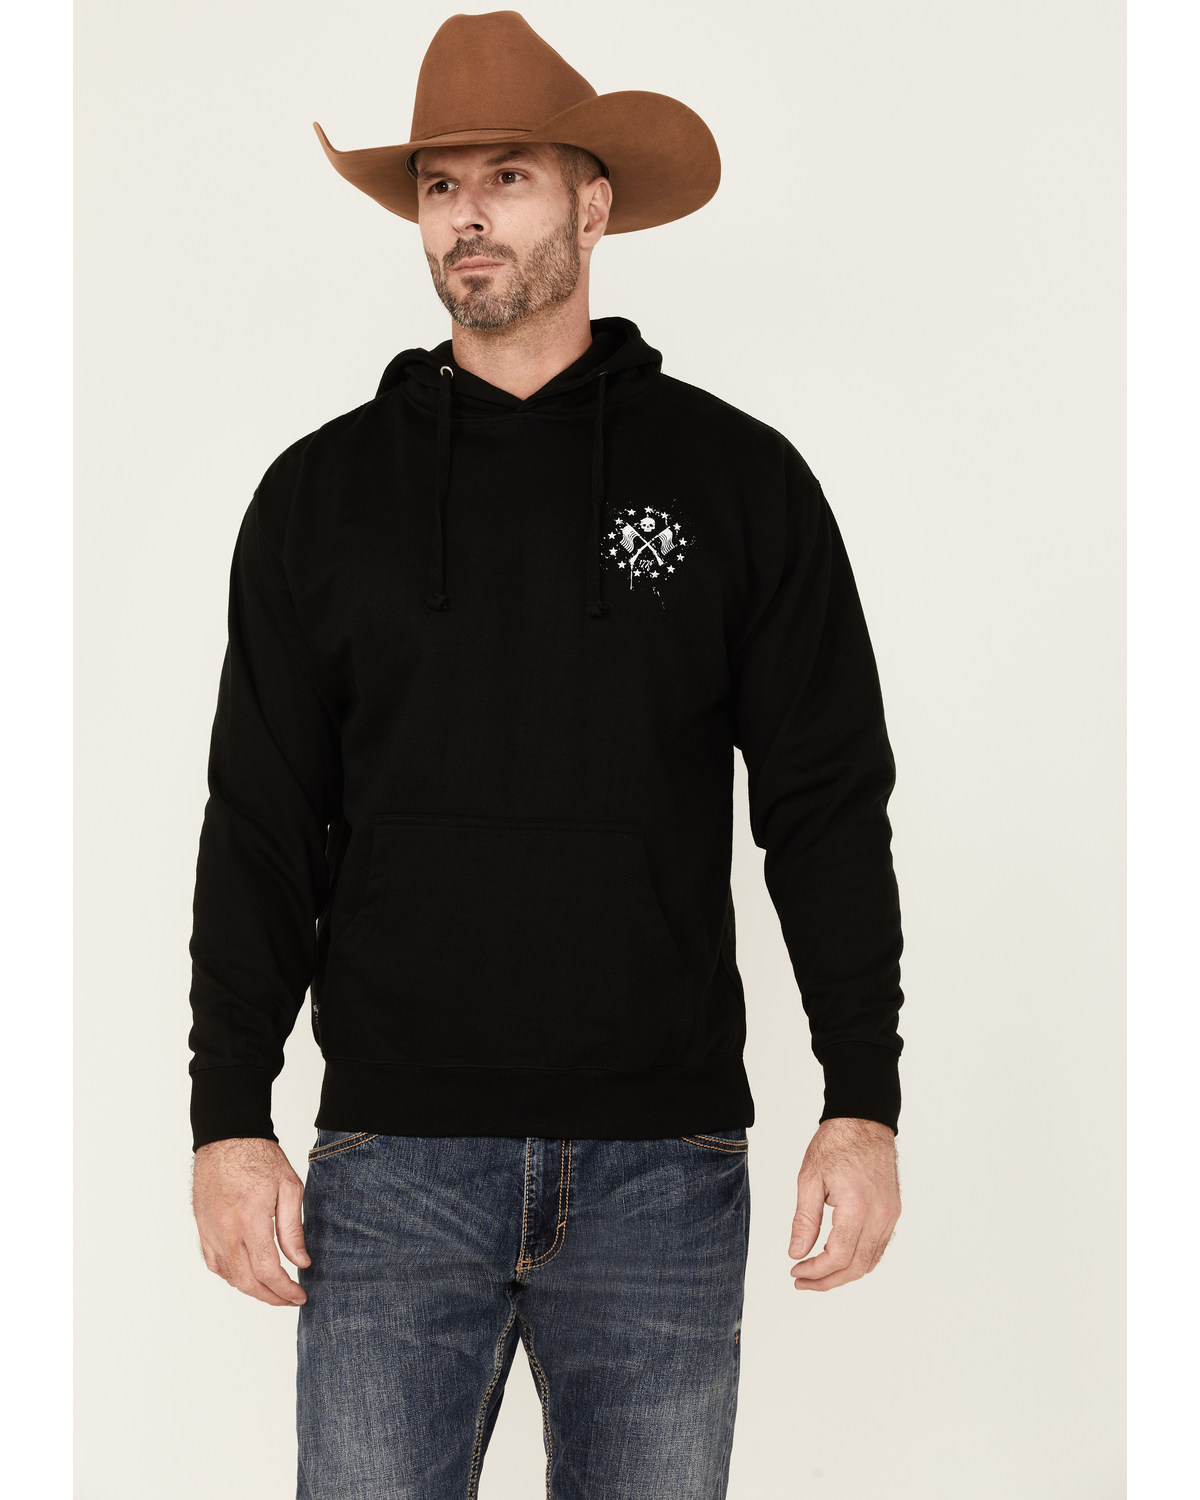 Howitzer Men's American Patriot Sons Of Liberty Graphic Hooded Sweatshirt